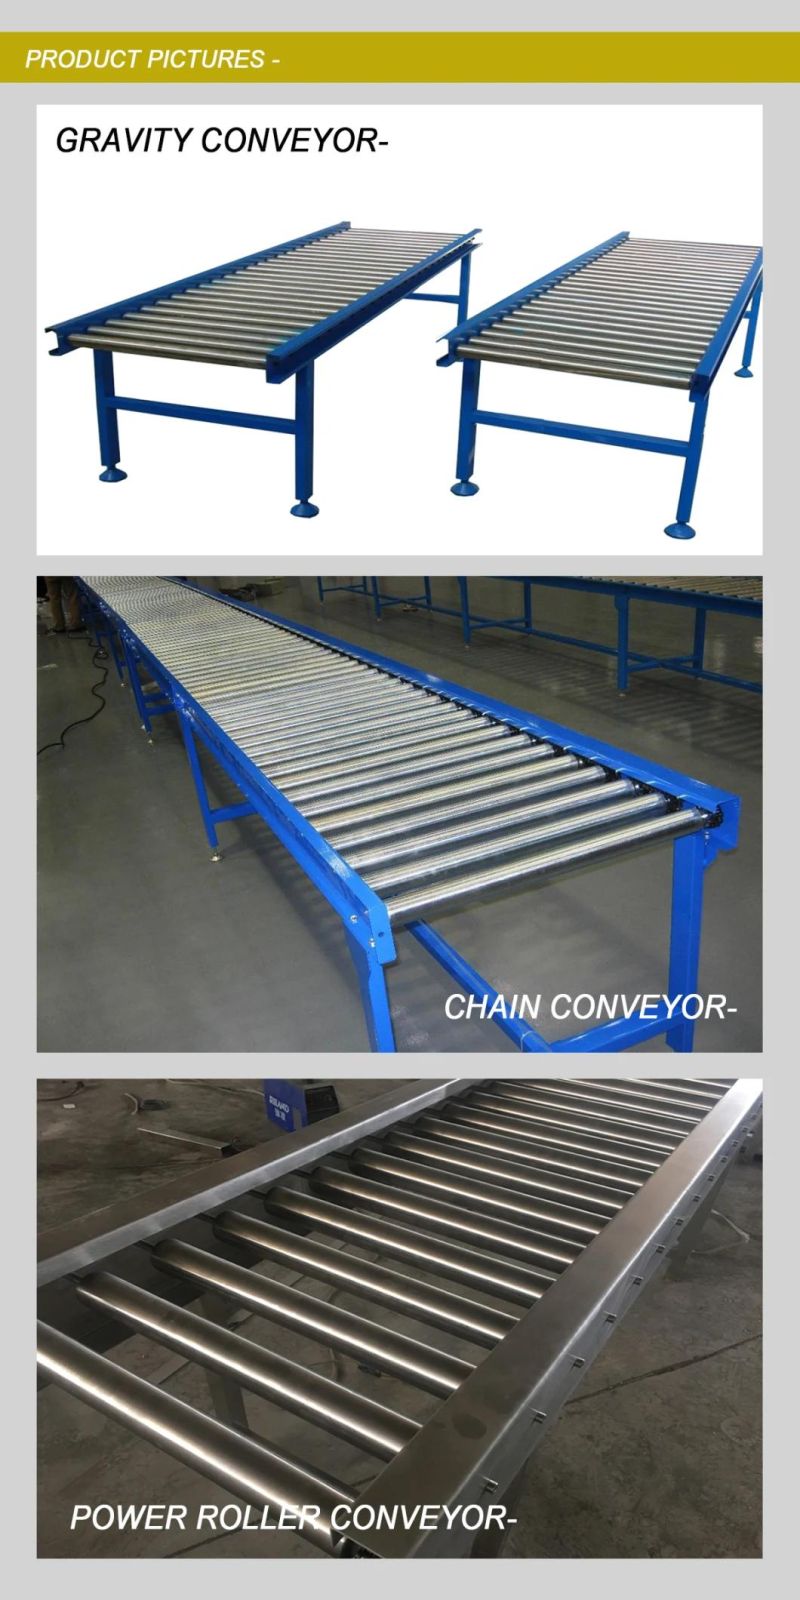 Powered Roller Conveyor for Factory Transfer